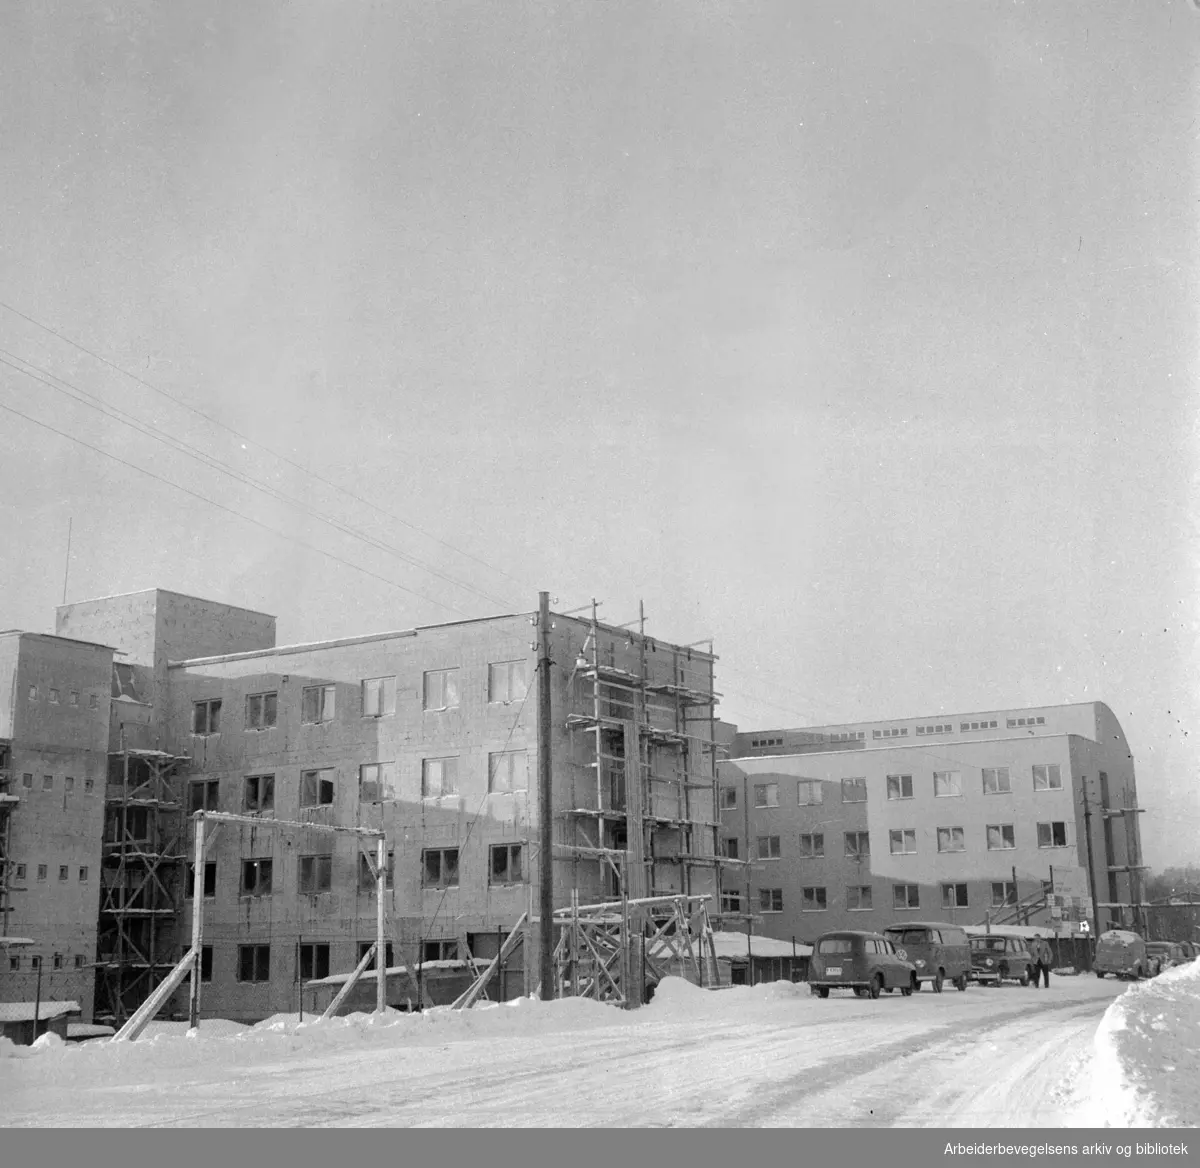 Papirindustriens forskningsinstitutt under bygging. Januar 1956